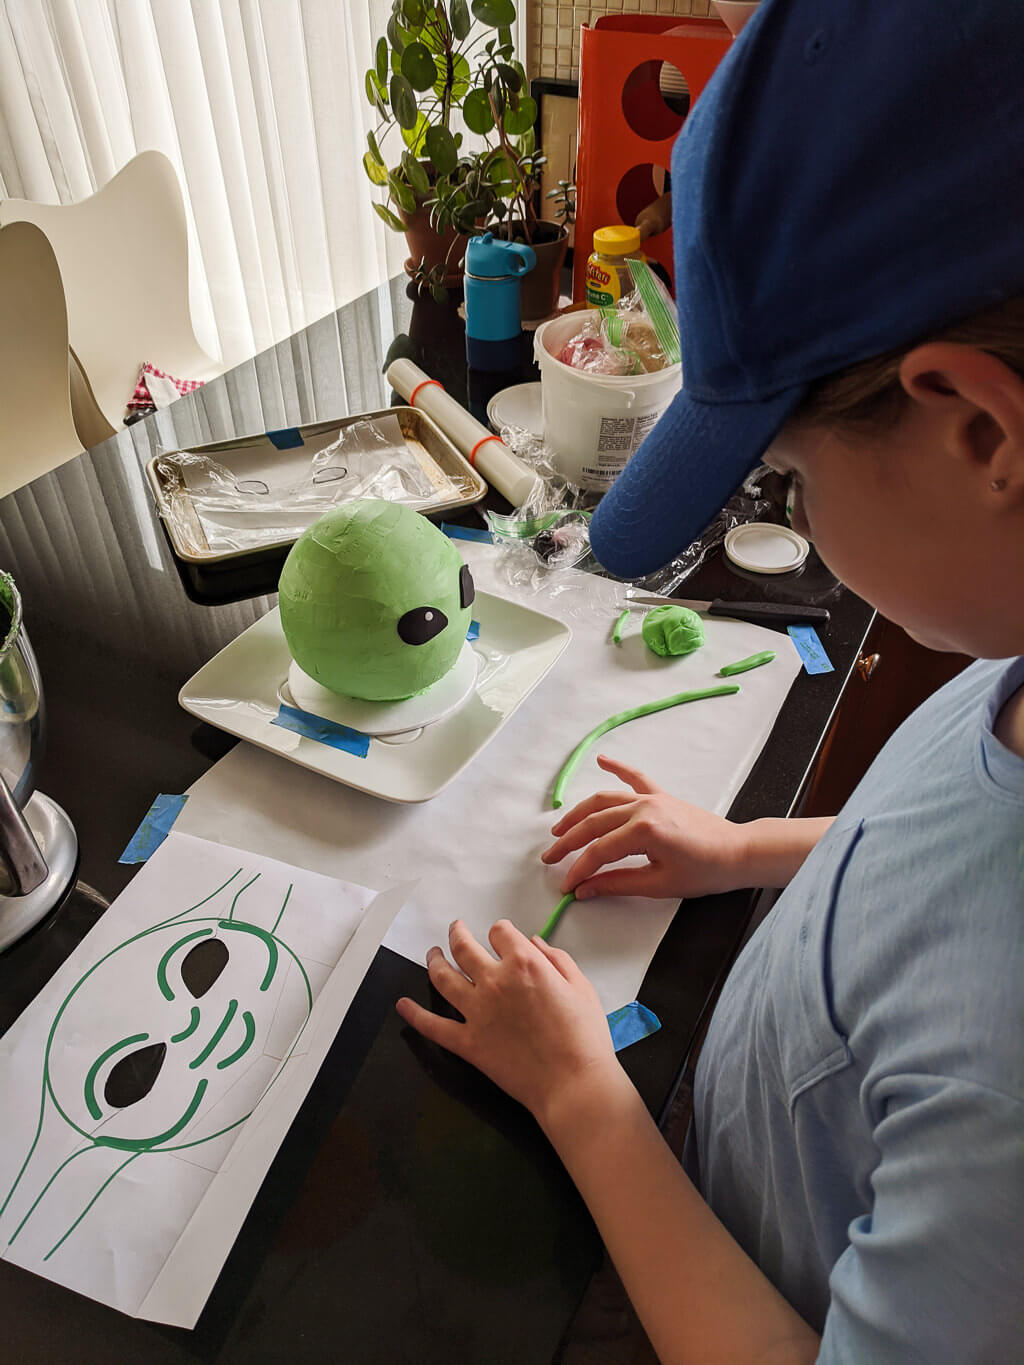 Elise making a Baby Yoda cake. Copyright Merriment Design Co. Do not distribute.